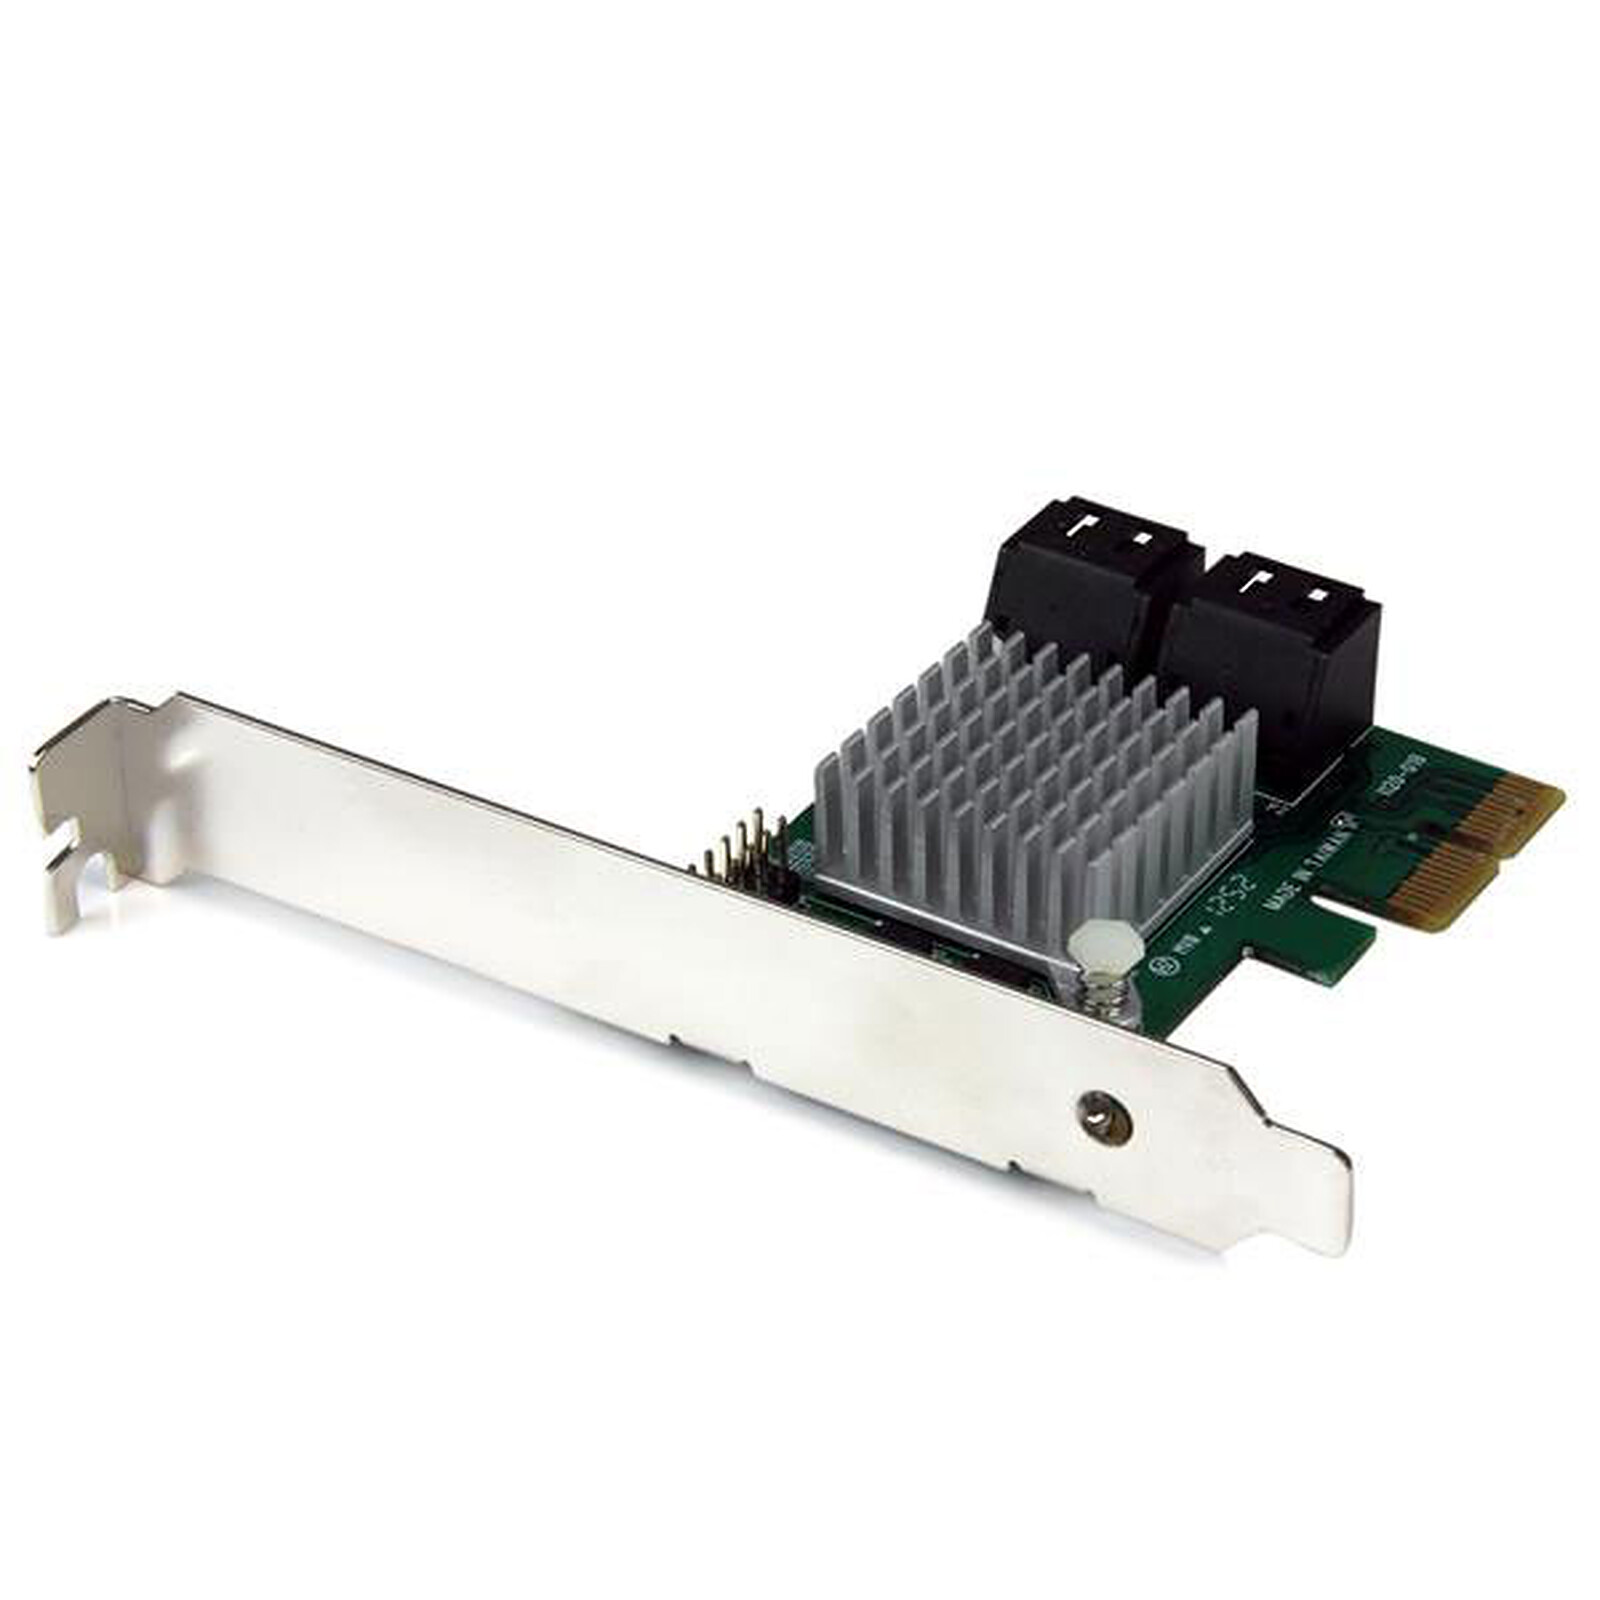 Overtreffen houten kwaadaardig StarTech.com PCI-E x2 controller card (4 SATA III ports) with HyperDuo  function - Controller card - LDLC 3-year warranty